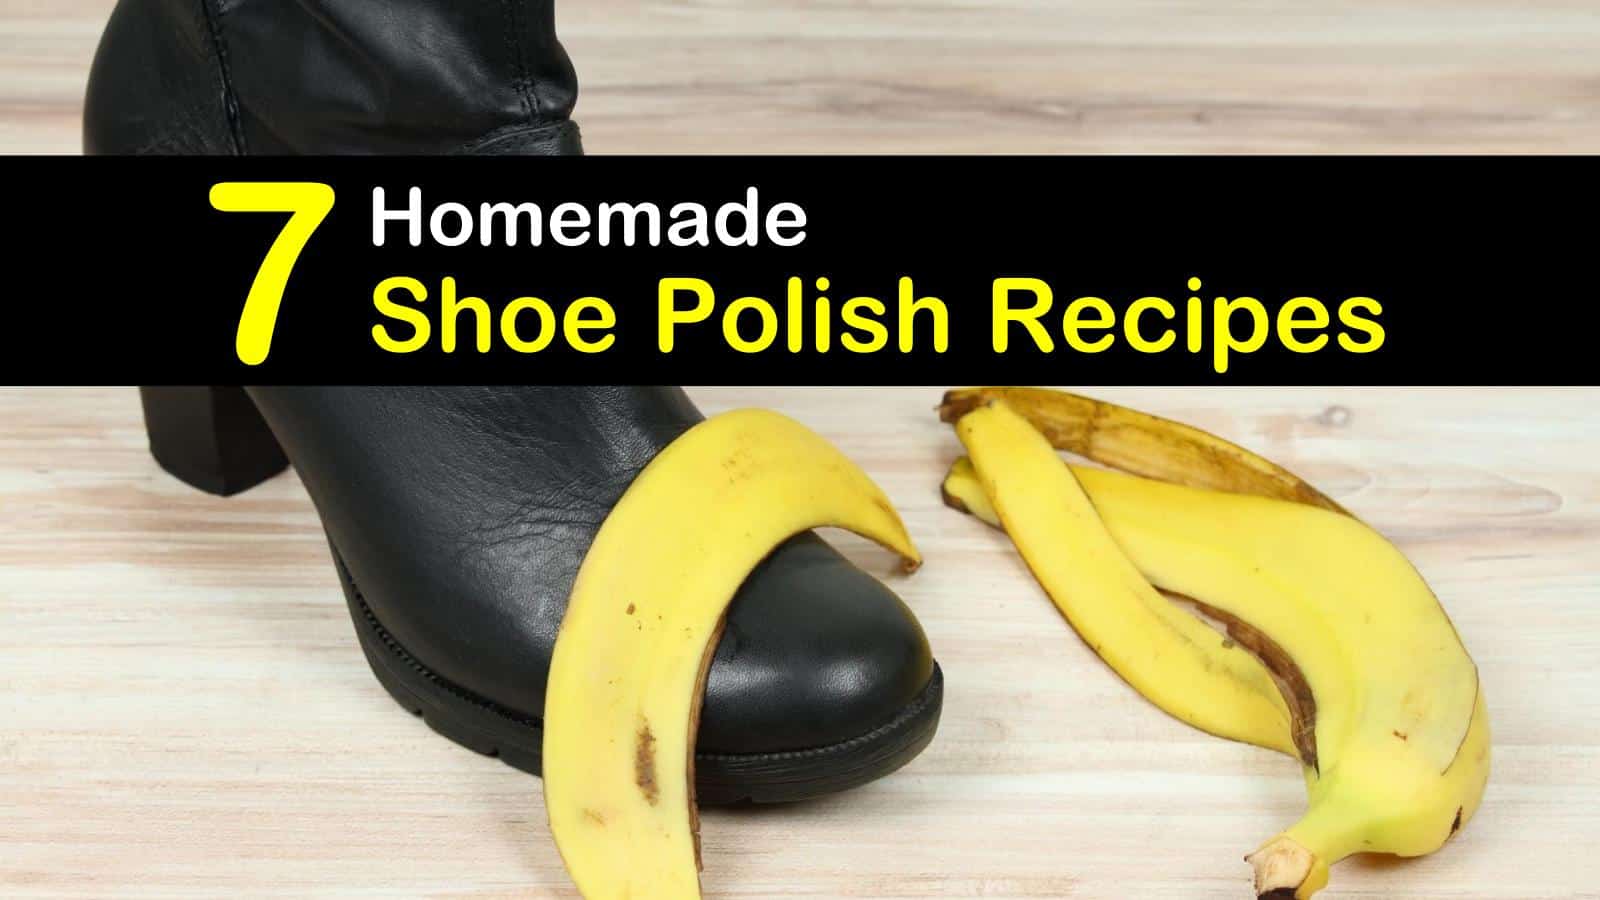 Shoe Polish Recipes To Make Your Shoes